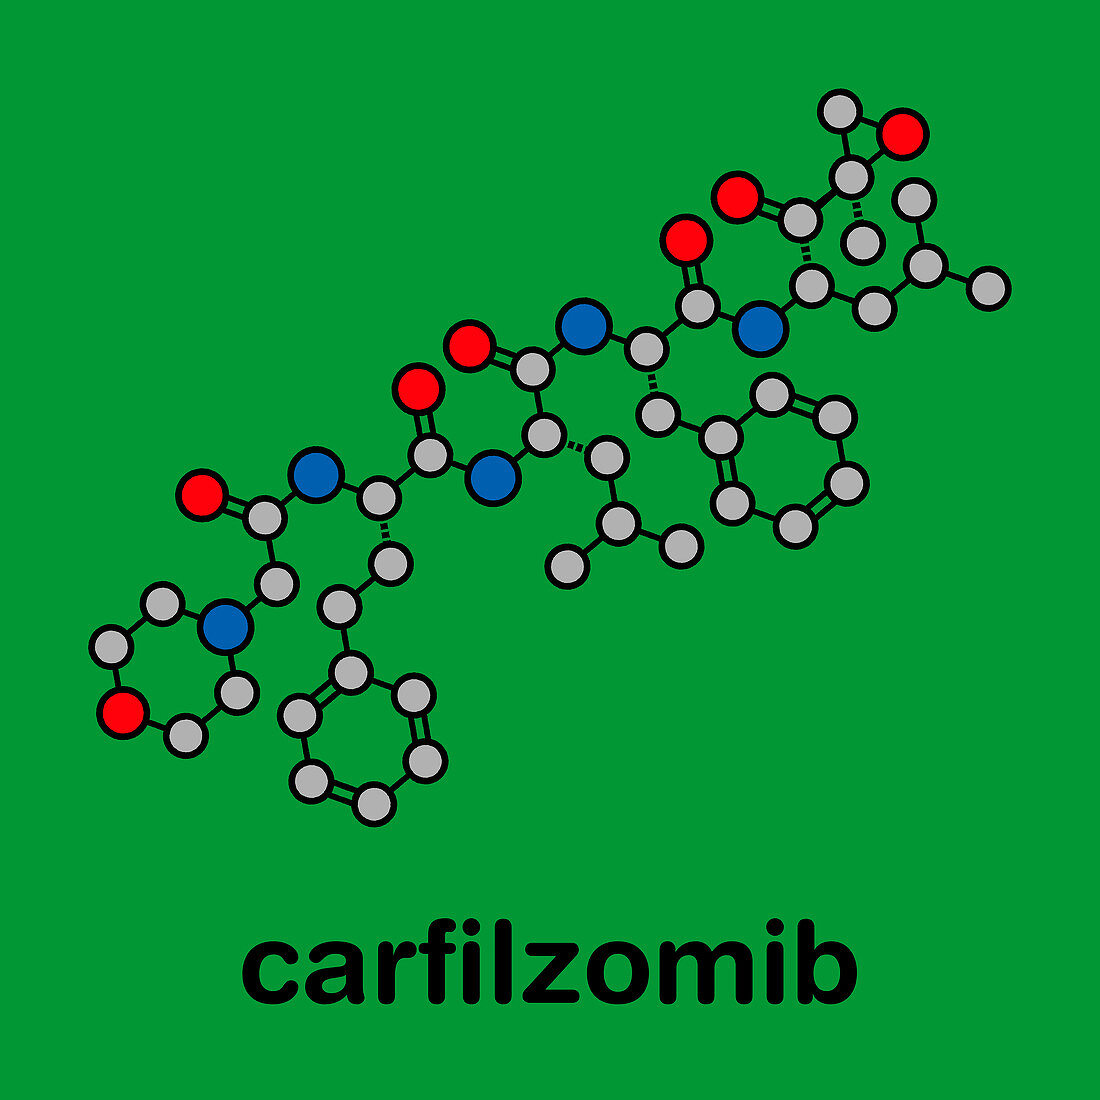 Carfilzomib multiple myeloma cancer drug, molecular model